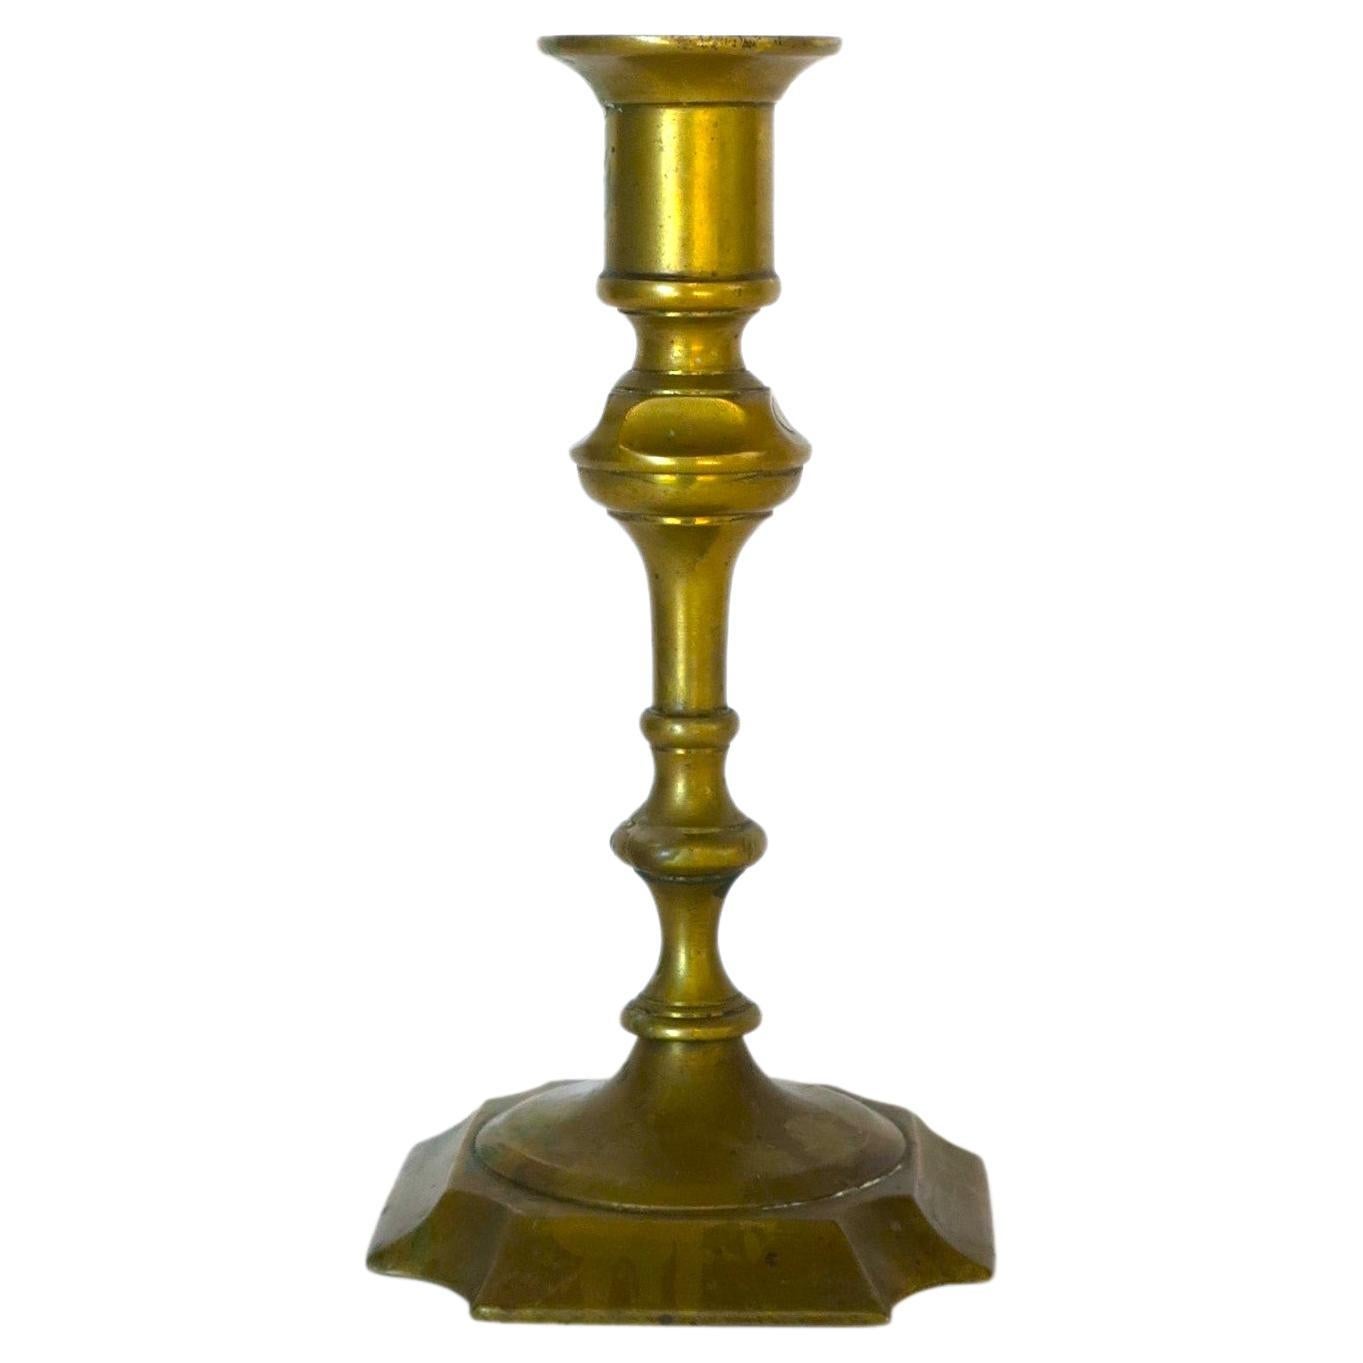 Antique English Brass Candlestick Holder